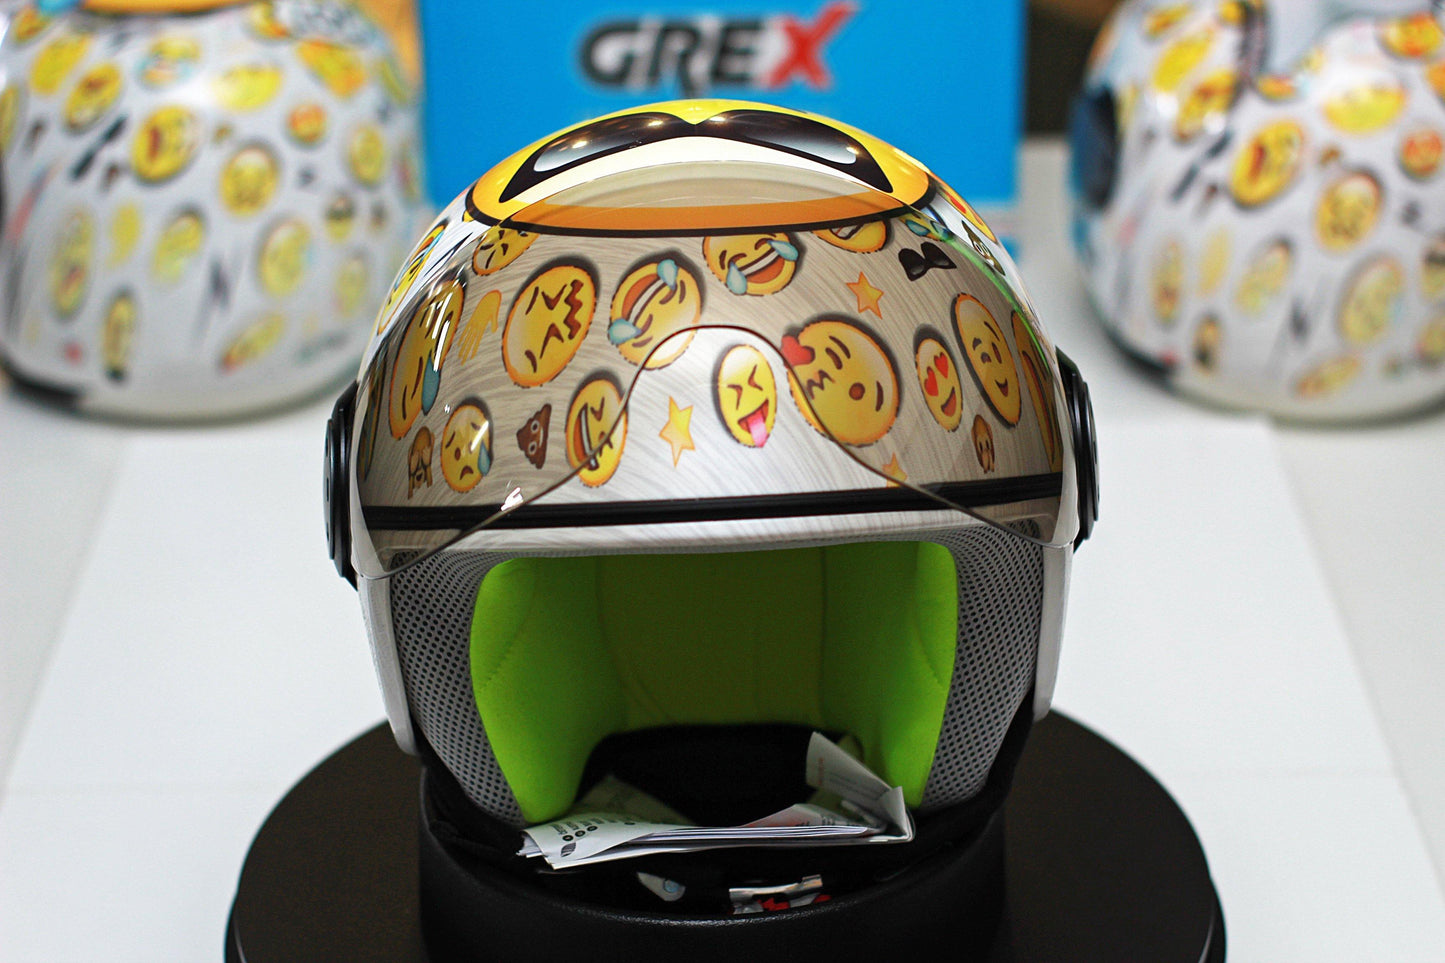 Grex G1.1 Fancy (20 Cool) - Durian Bikers